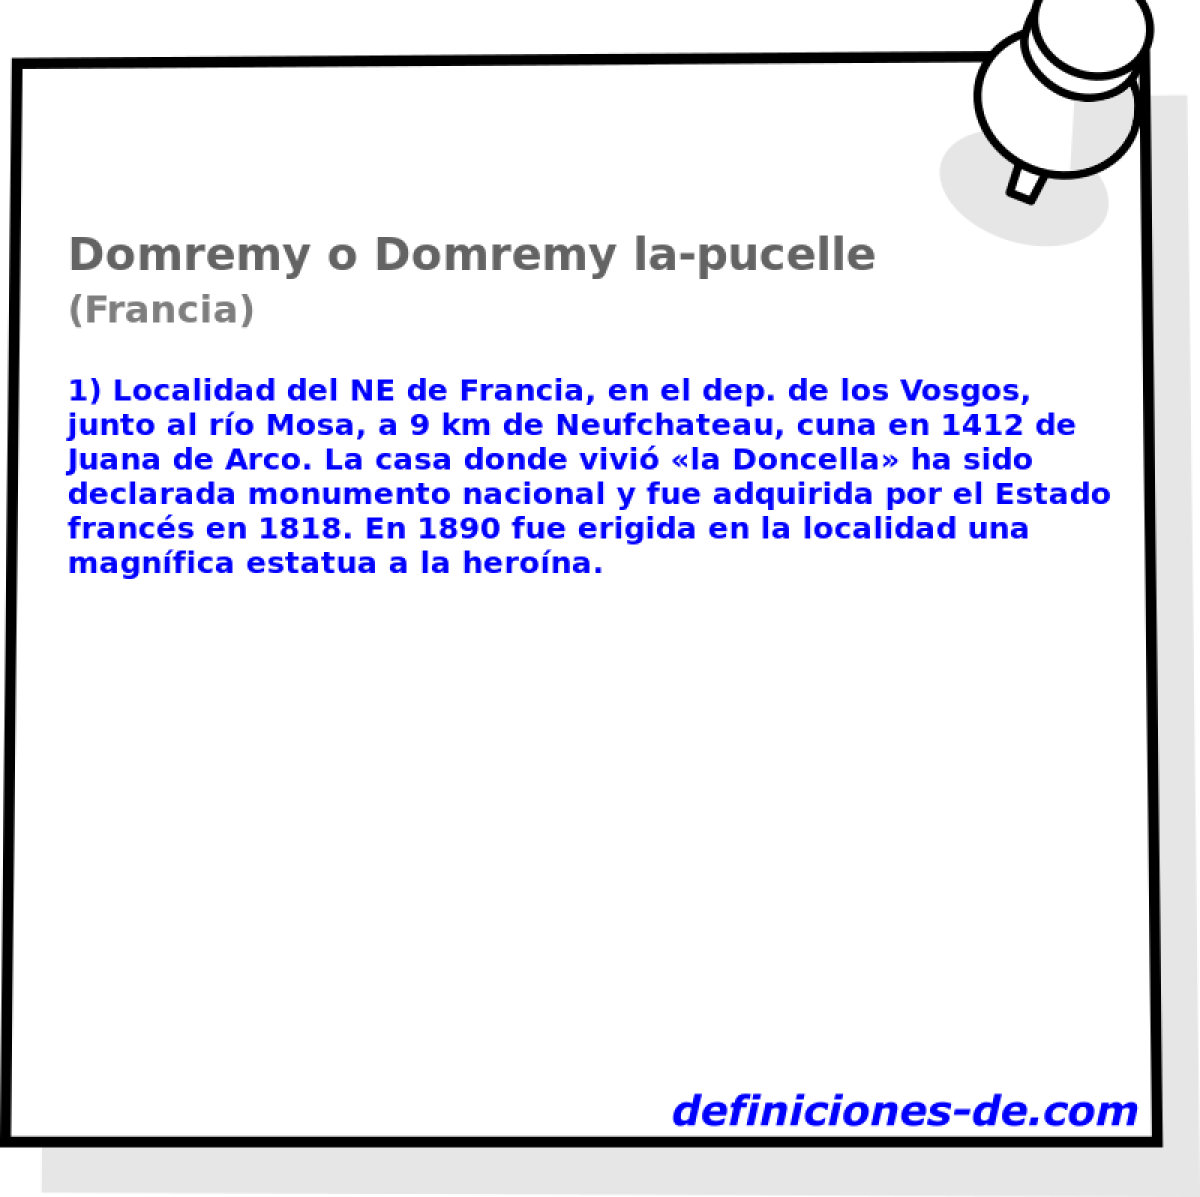 Domremy o Domremy la-pucelle (Francia)